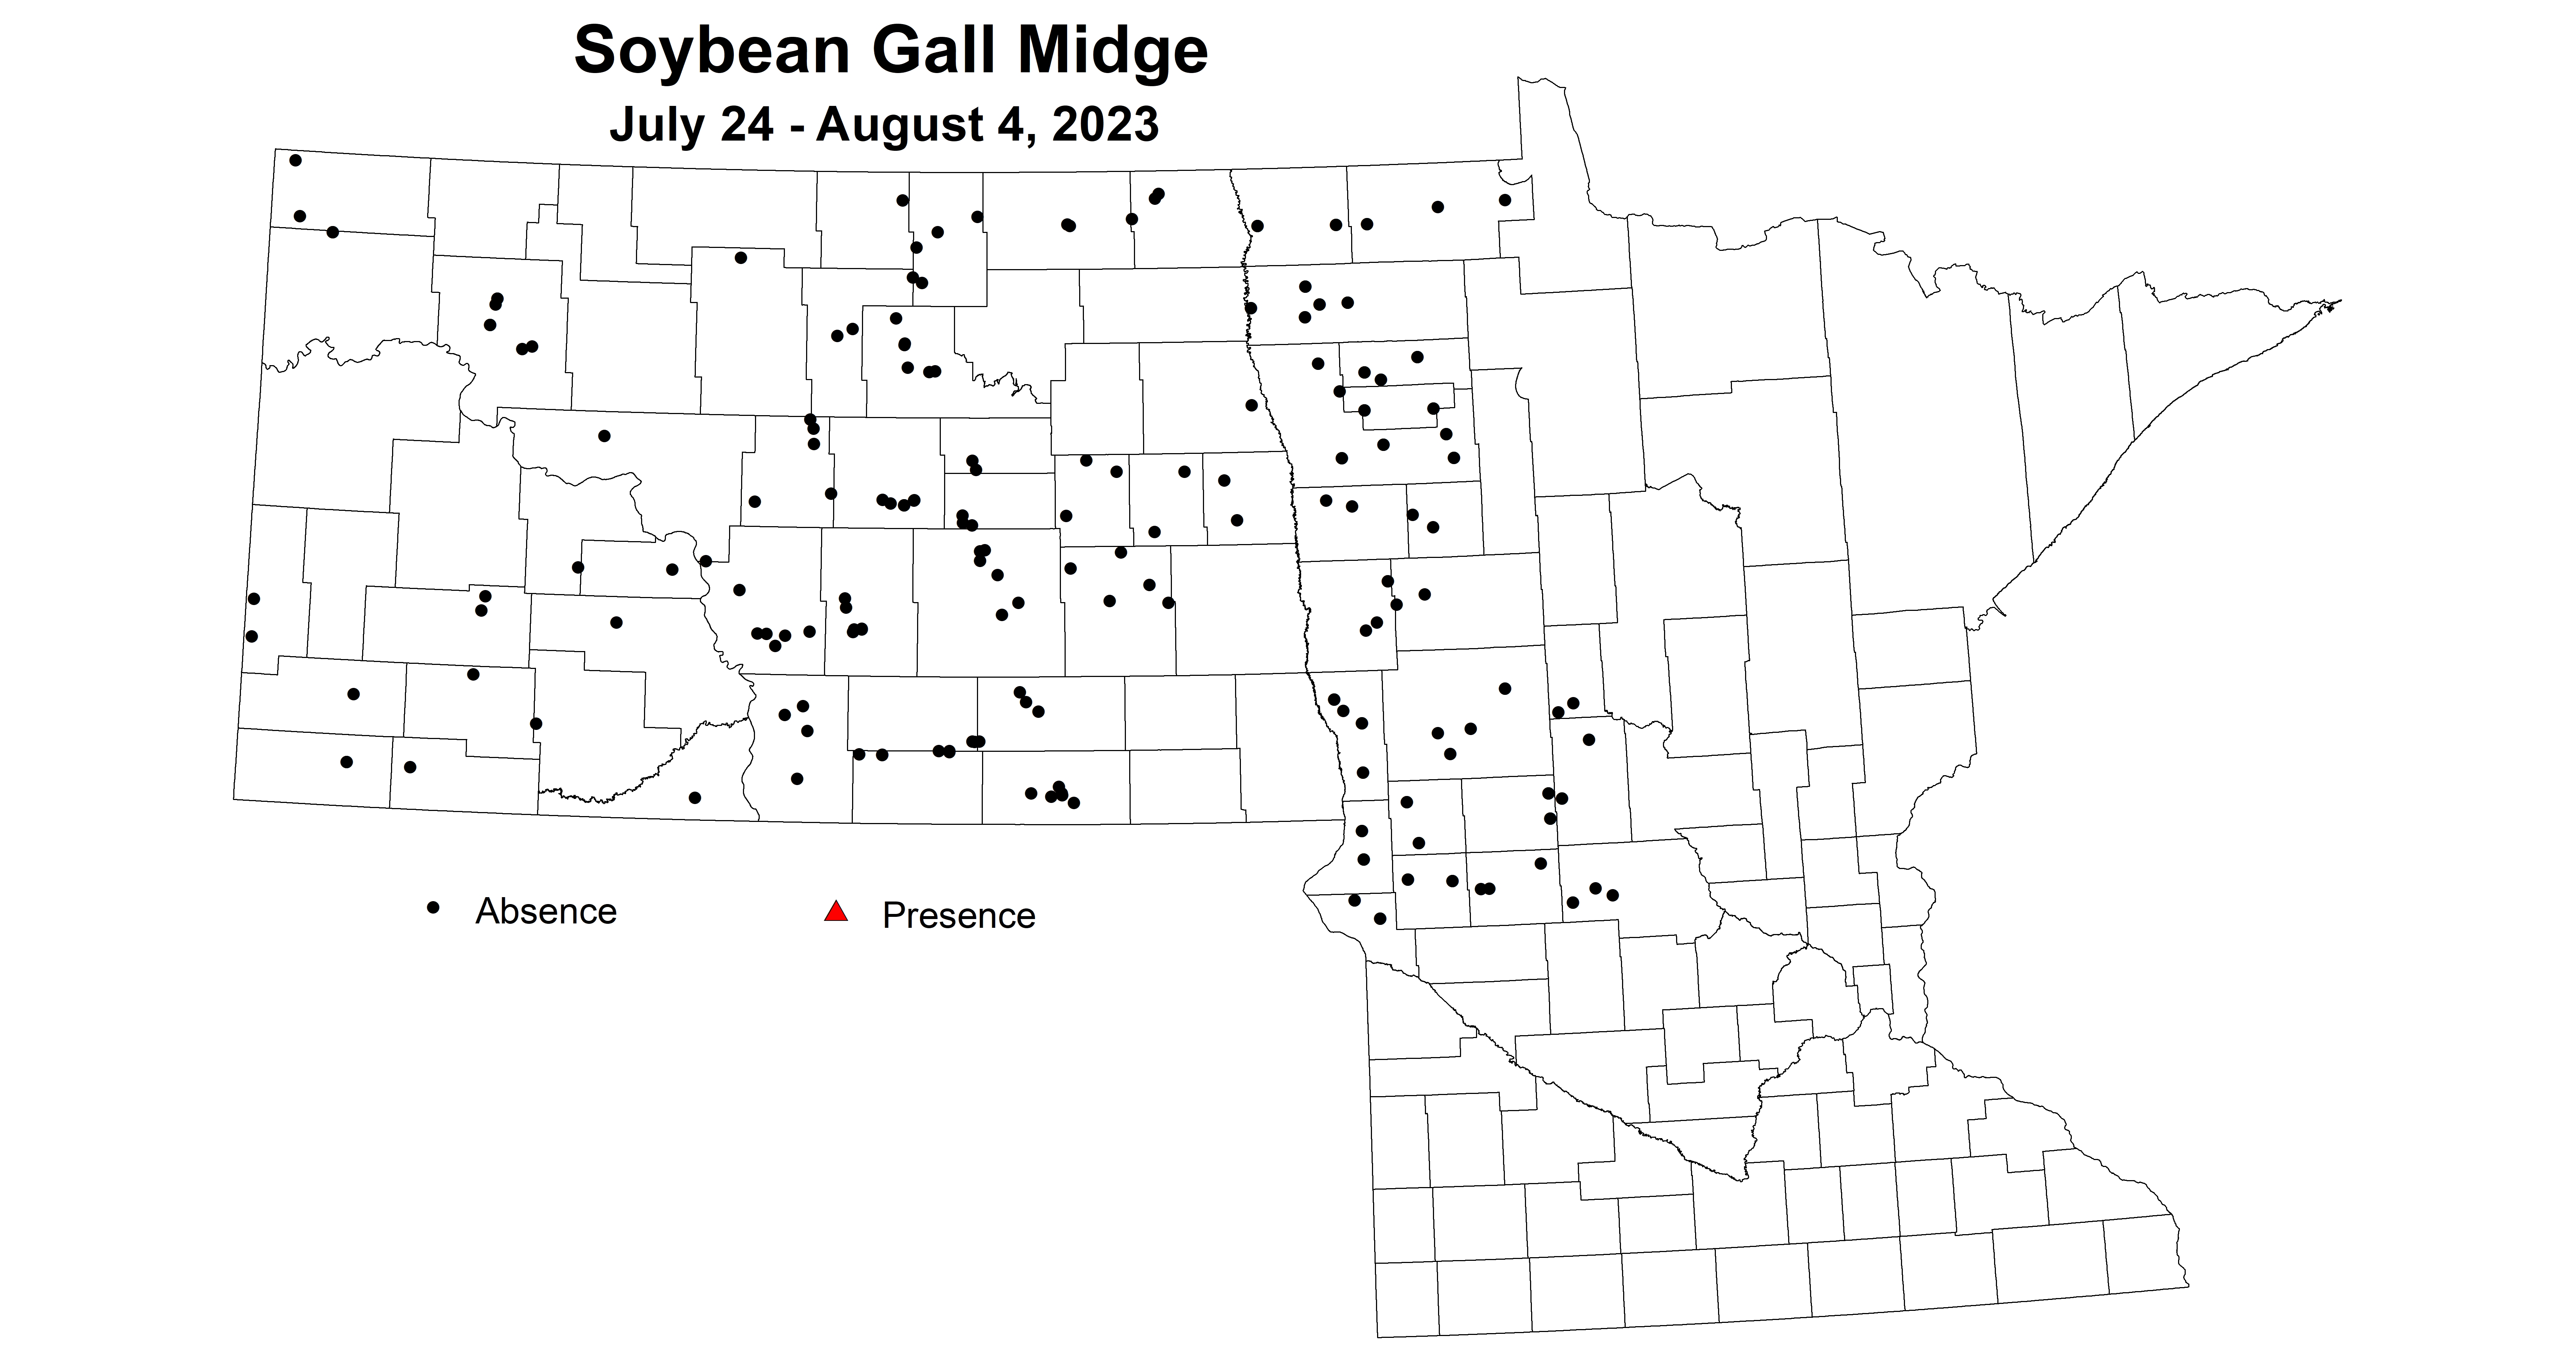 soybean gall midge 7.24-8.4 2023